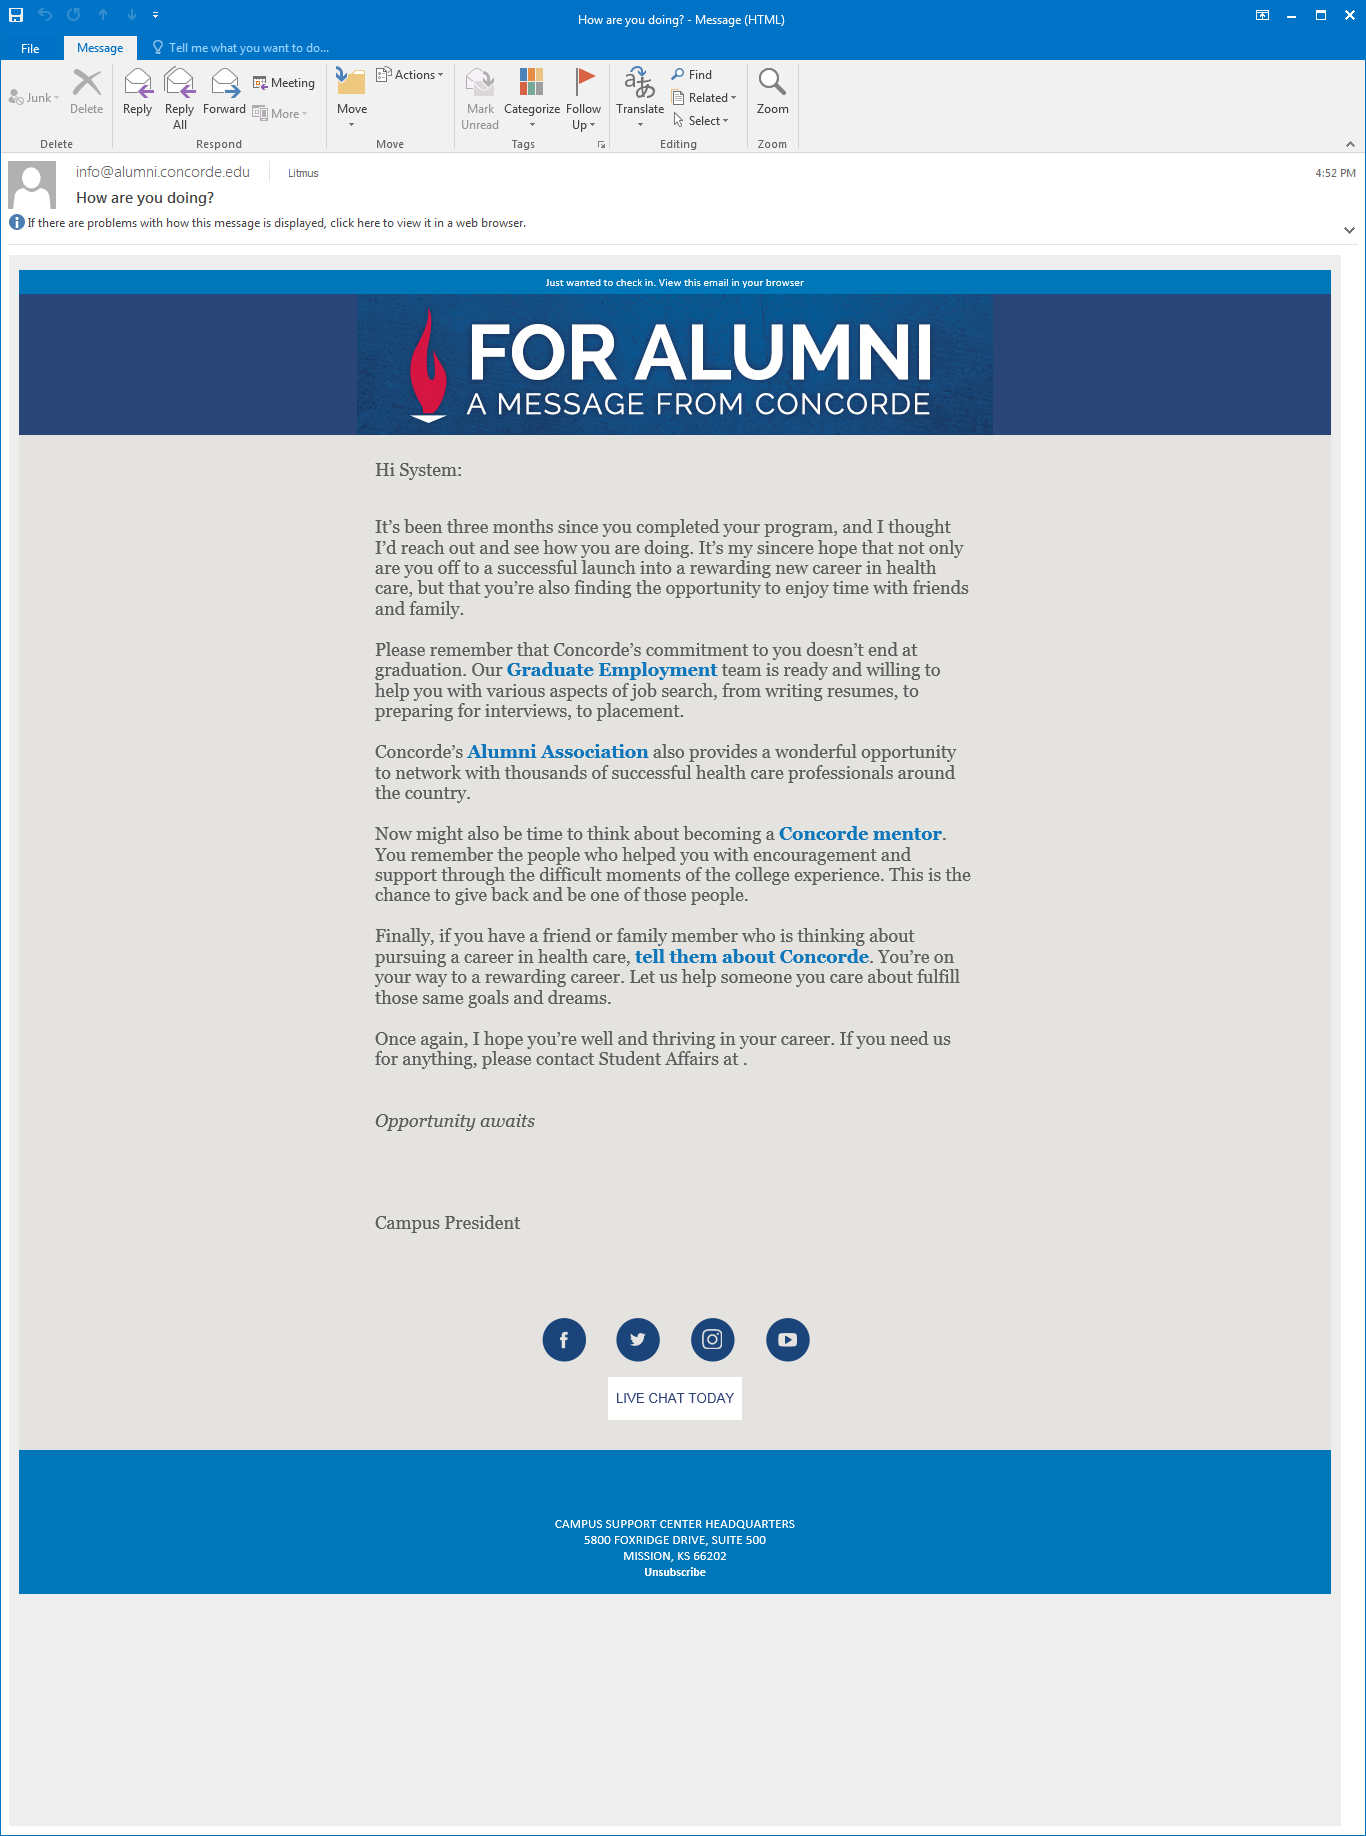 Concorde Career Colleges Alumni Email Series slide #2